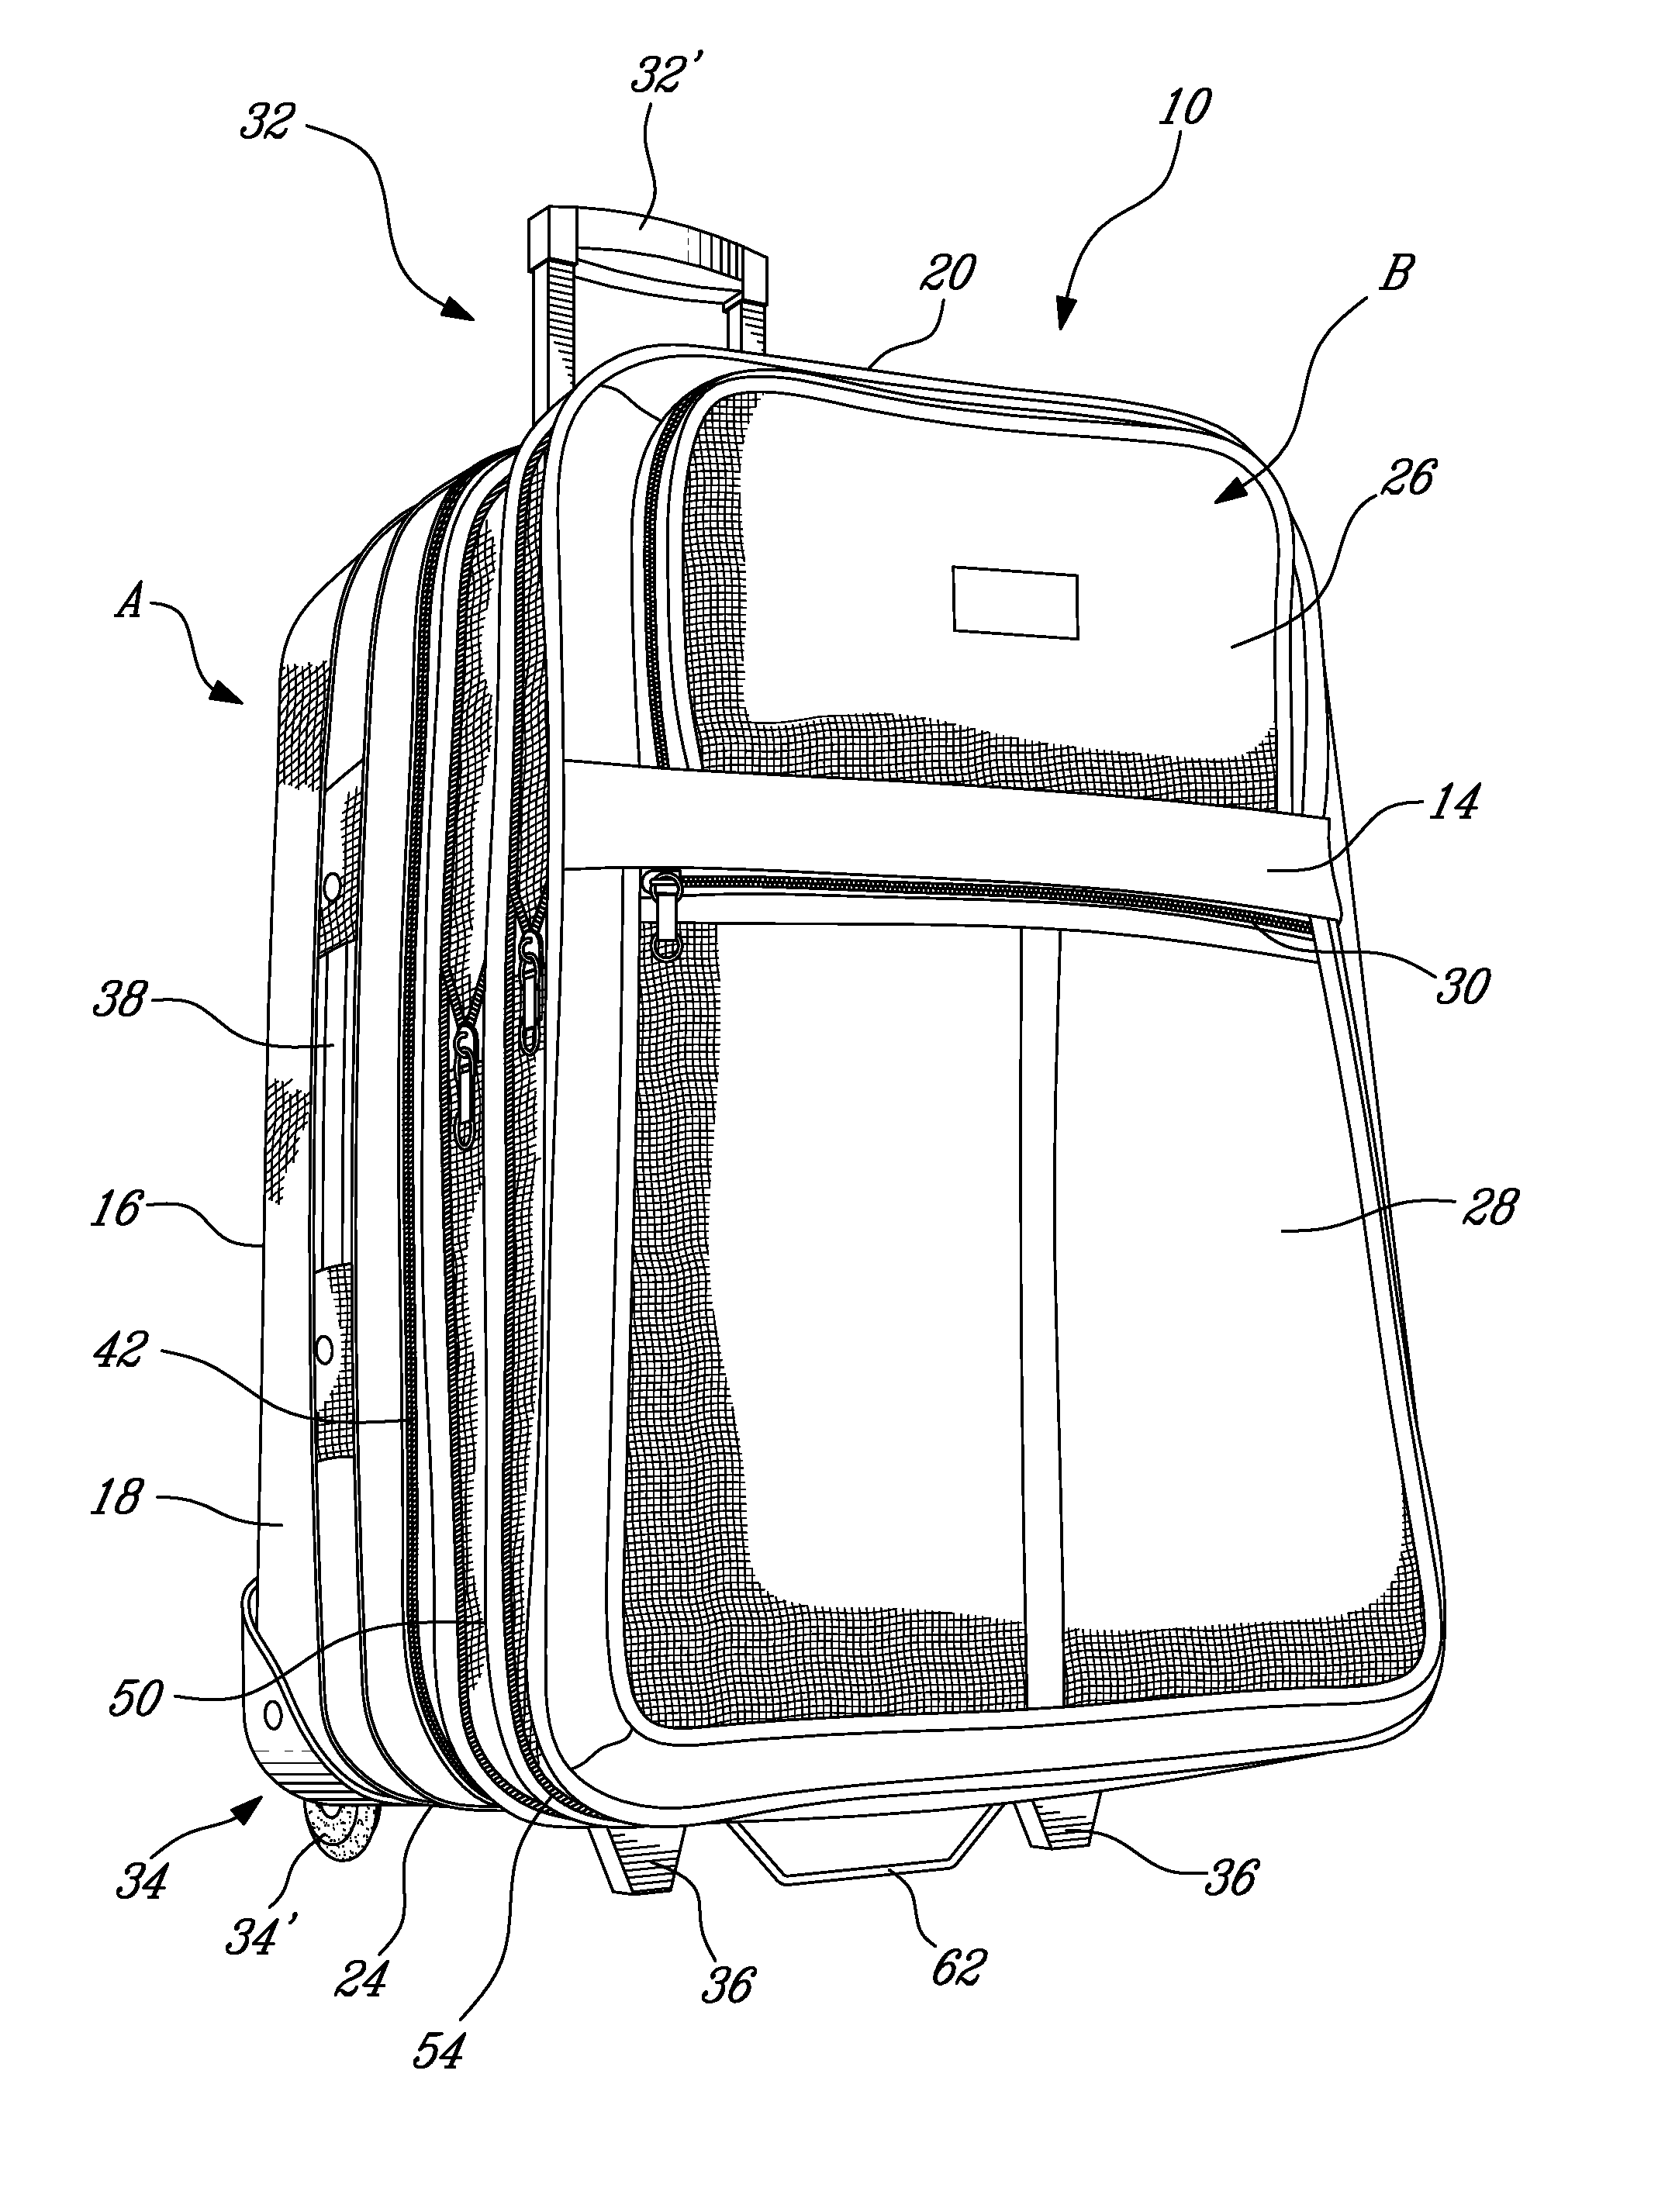 Multi-level expandable suitcase